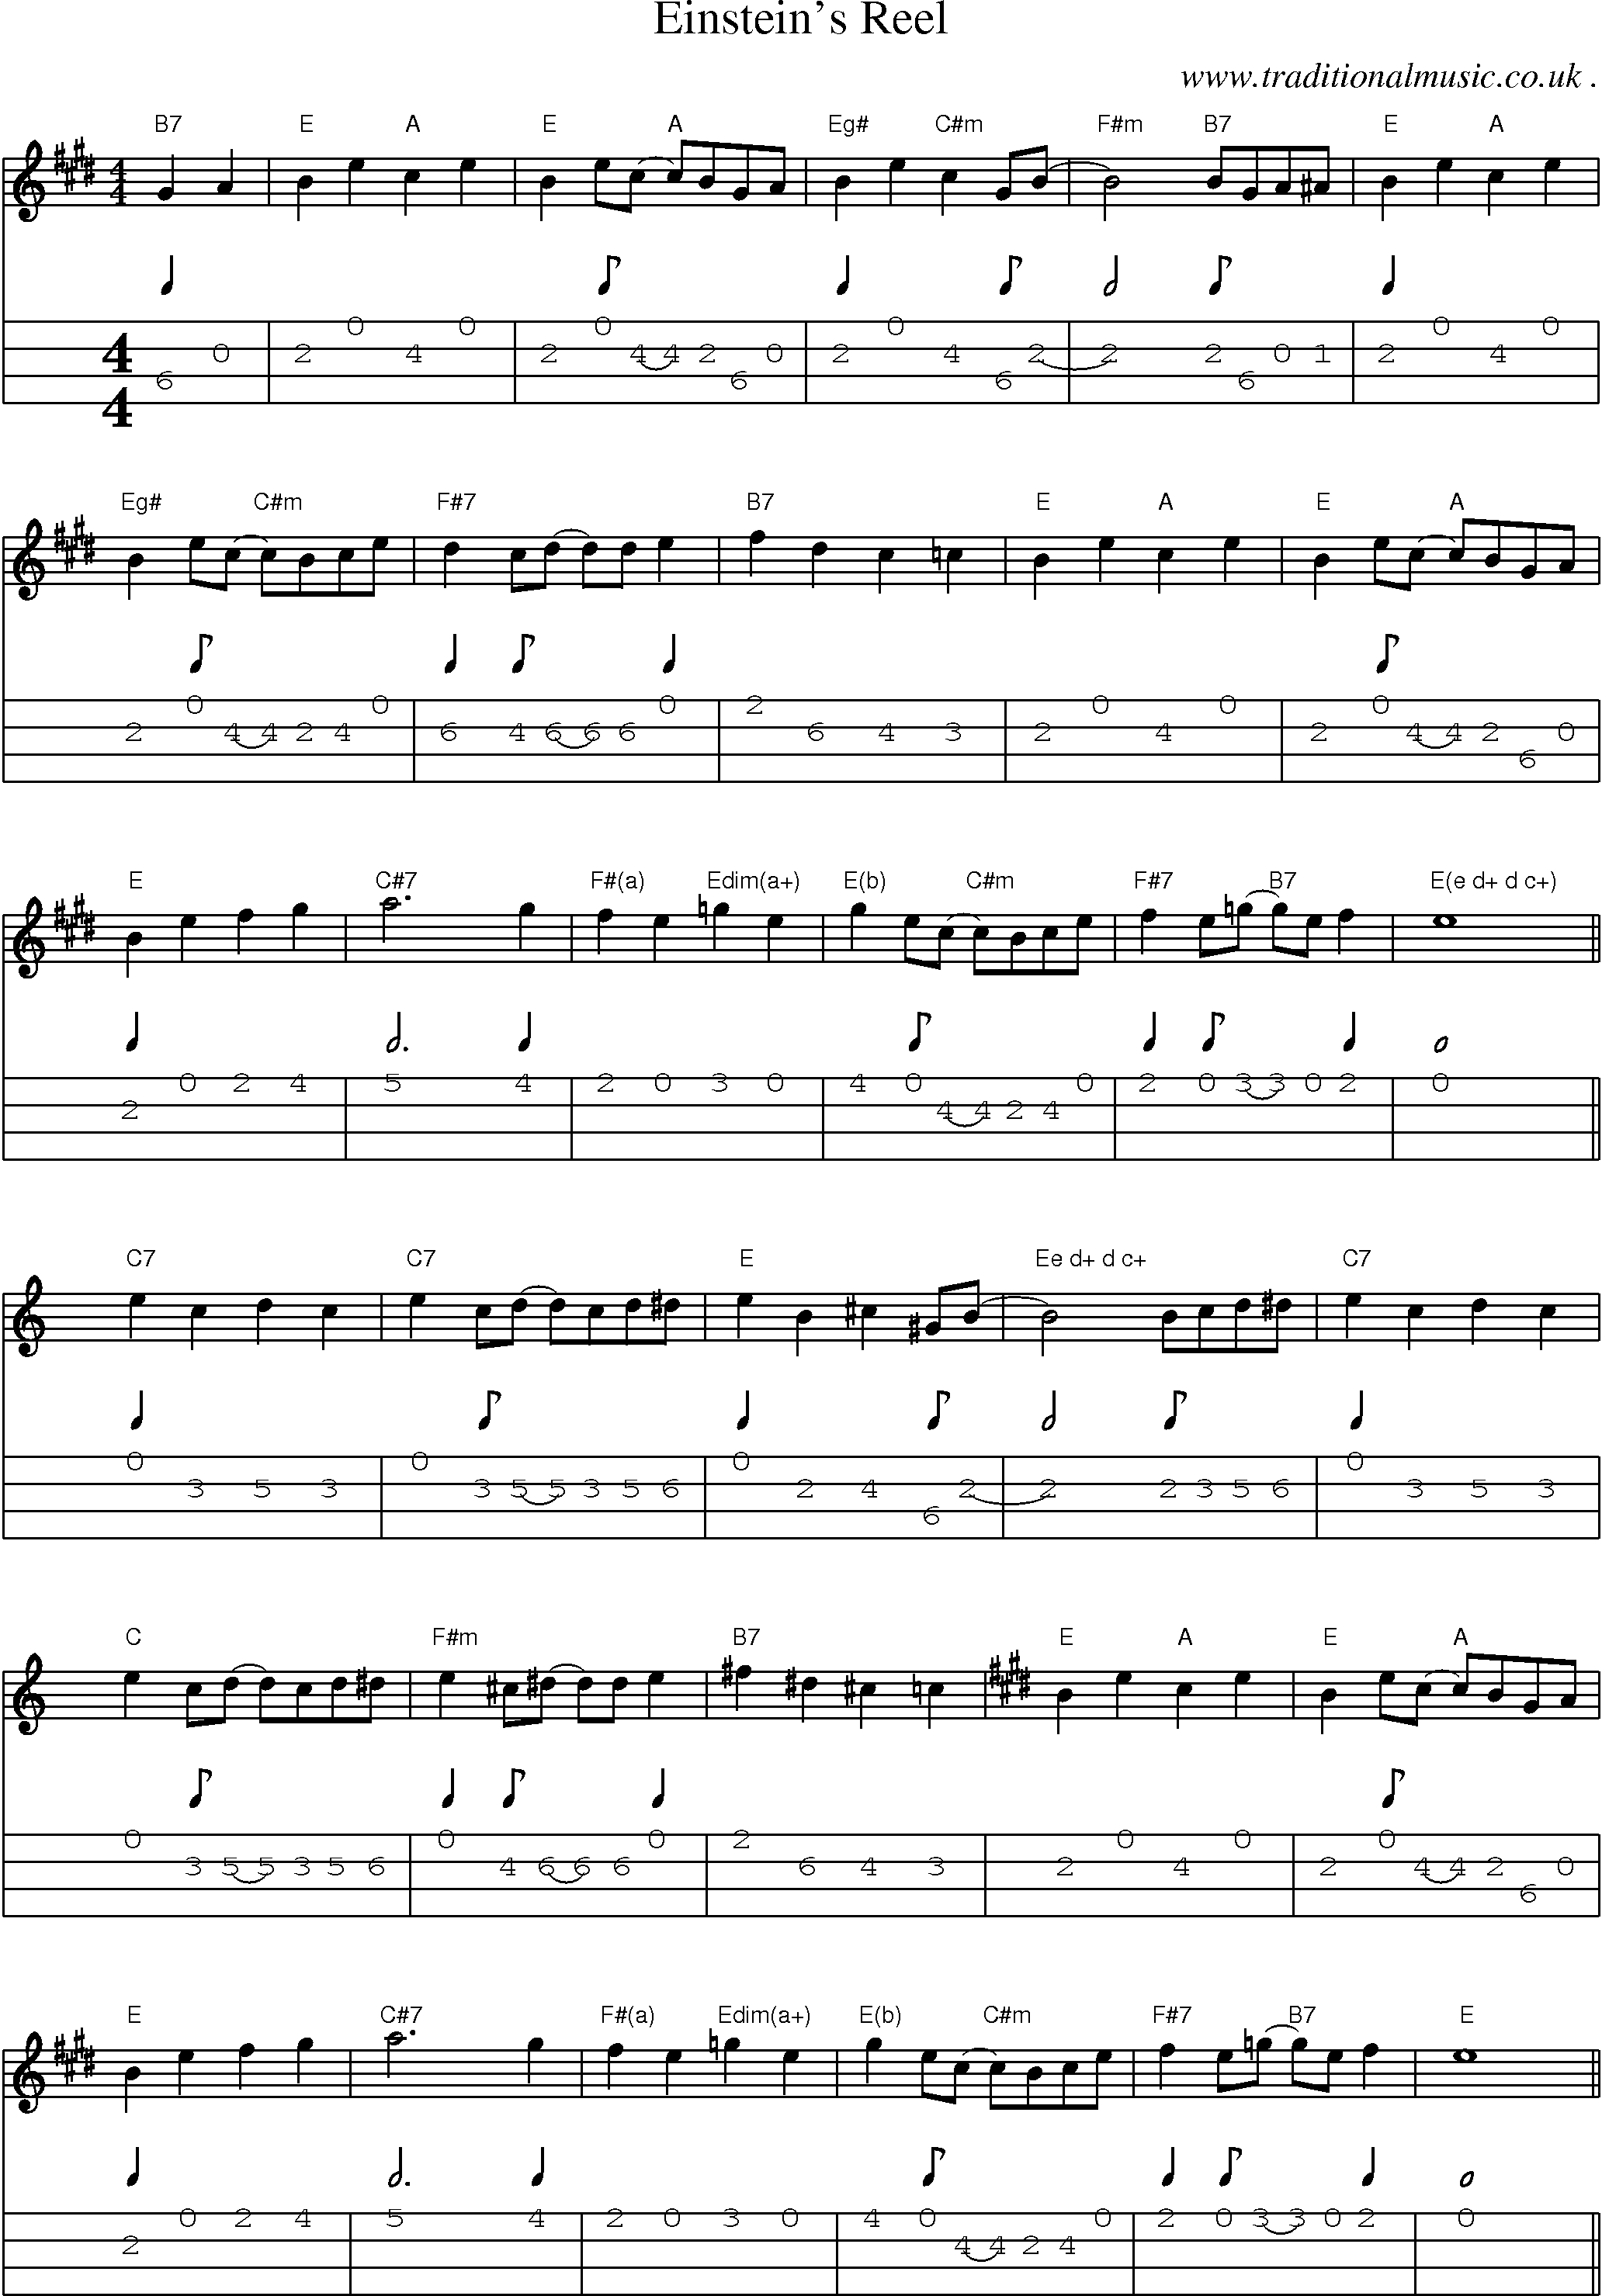 Sheet-Music and Mandolin Tabs for Einsteins Reel